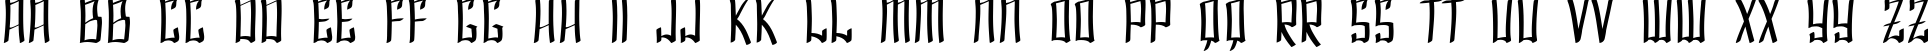 Пример написания английского алфавита шрифтом SF Shai Fontai